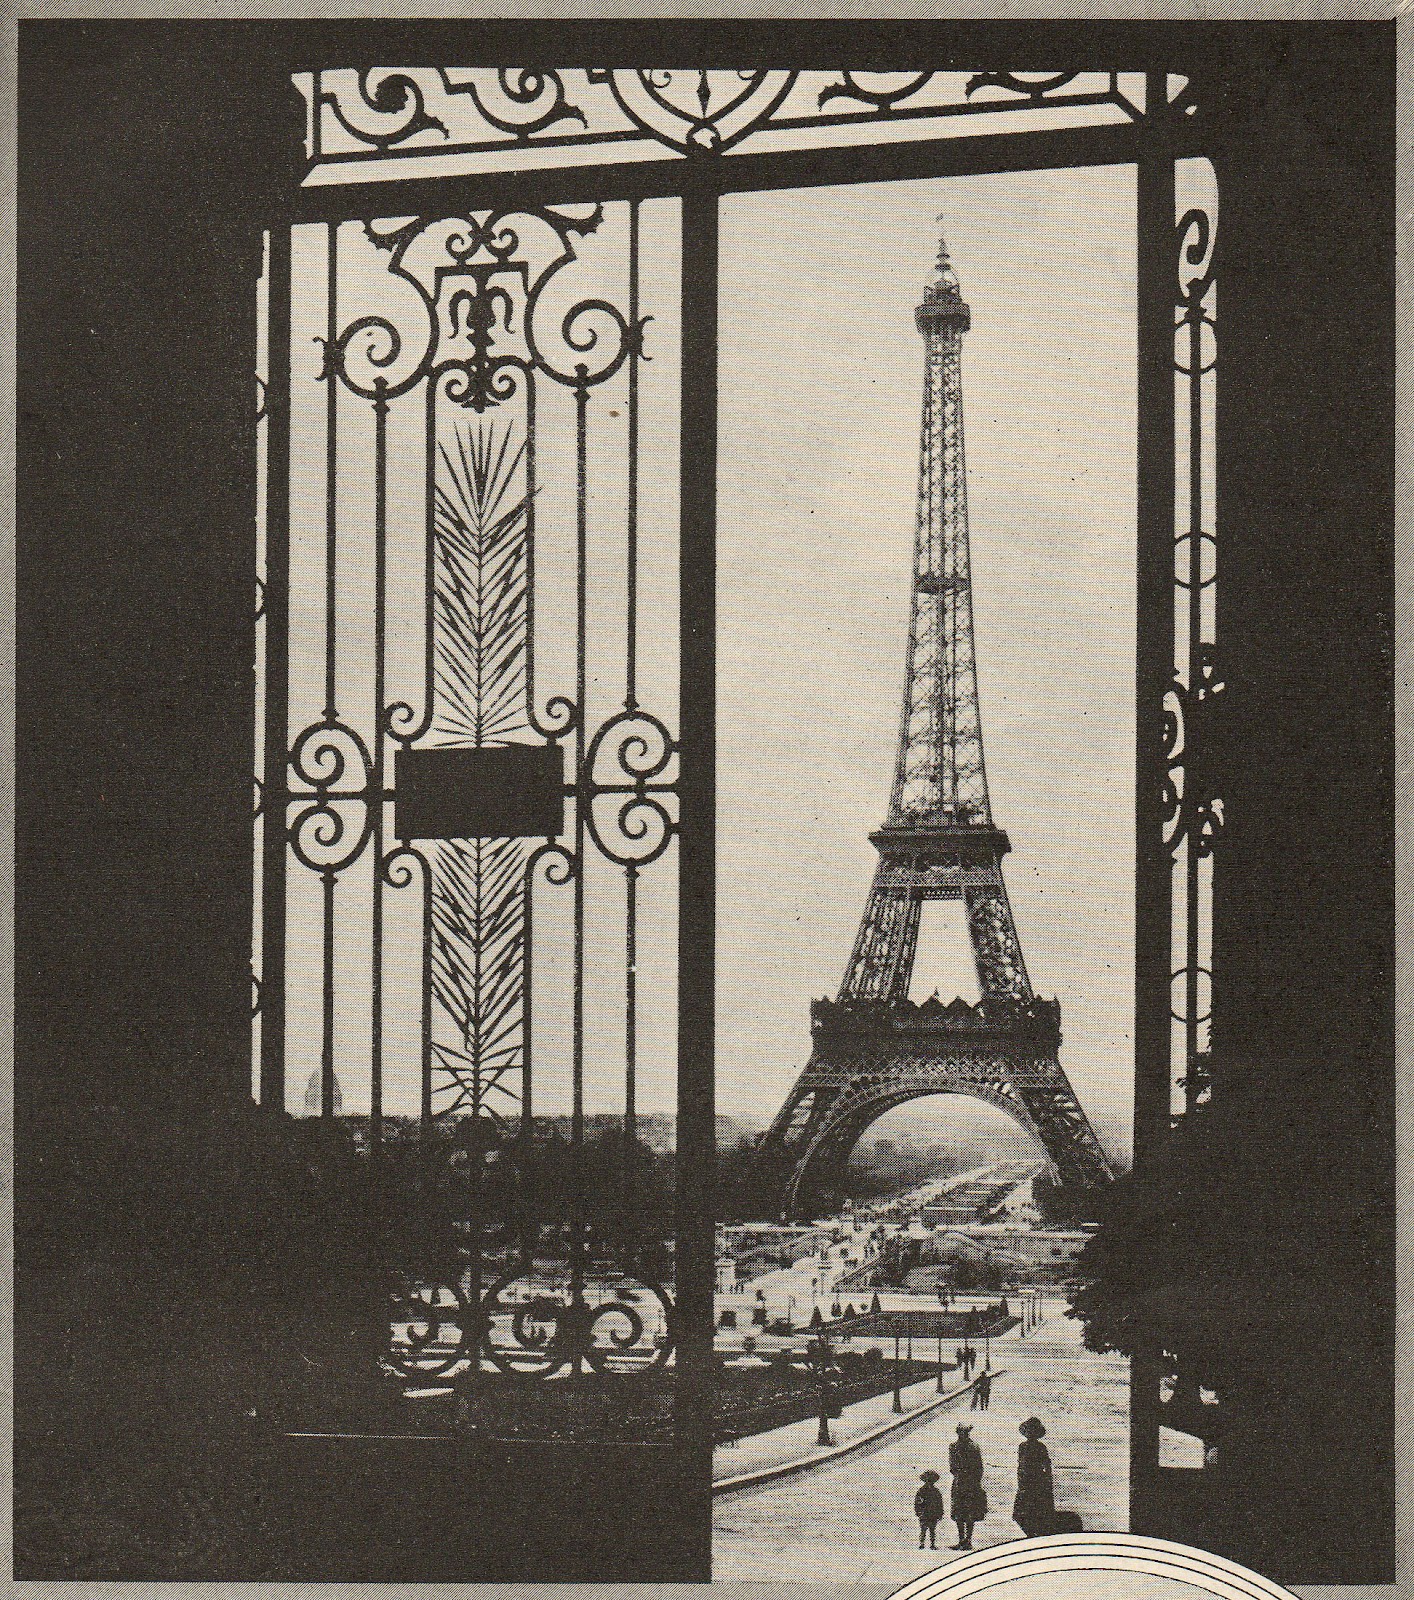 Leaping Frog Designs: Hello Paris Vintage Eiffel Tower Image